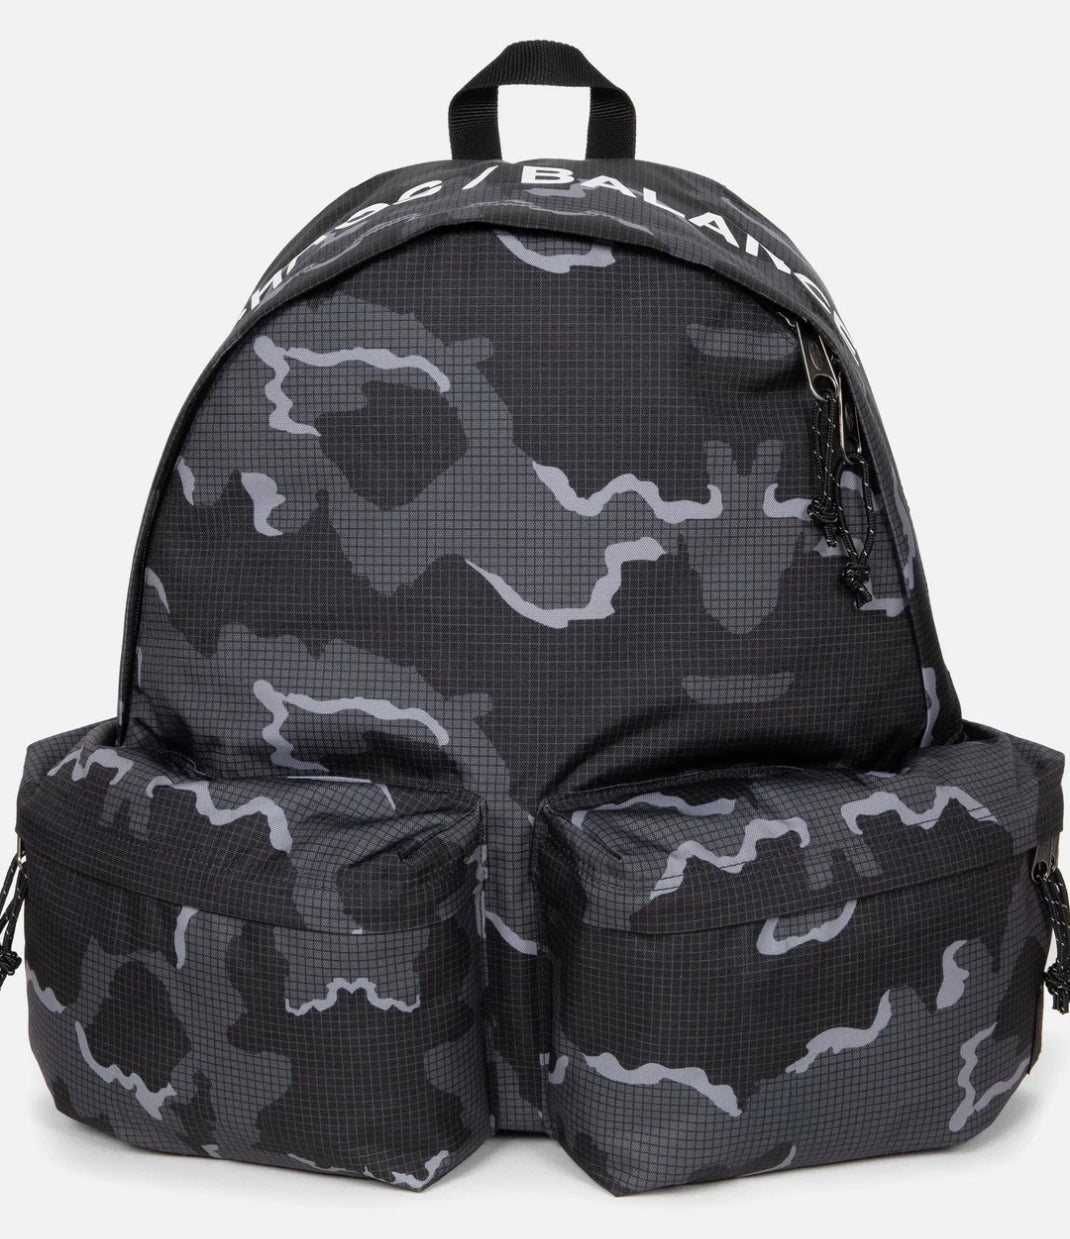 Eastpak/Undercover Backpack “Black Camo”